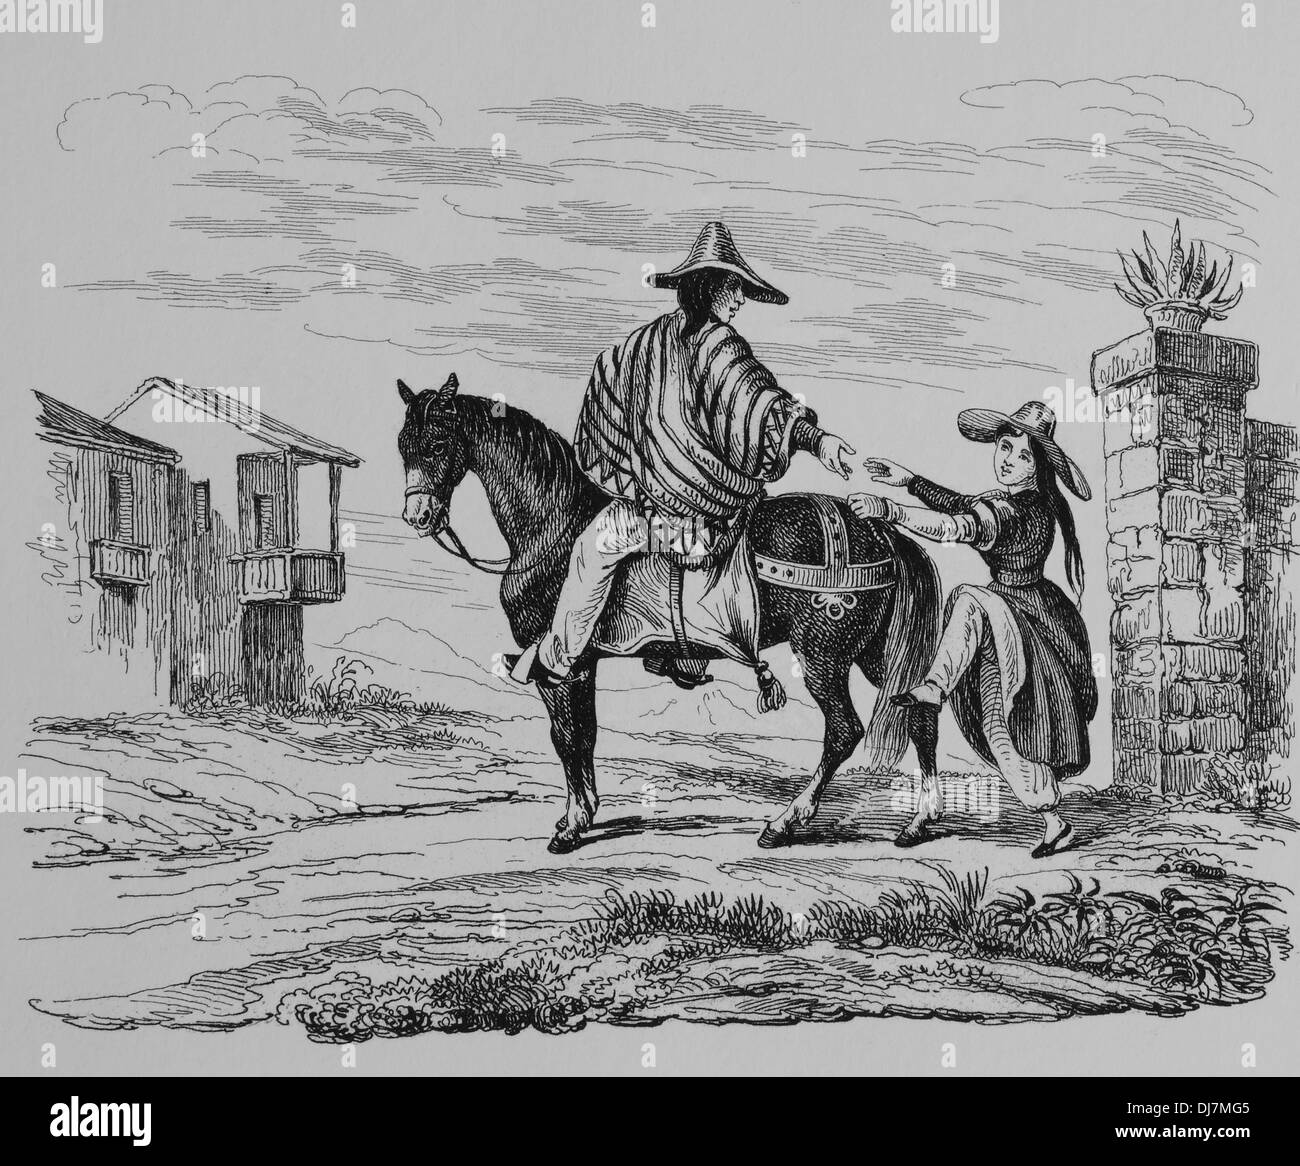 Amerika. Peruaner. 1840. Gravur. Stockfoto